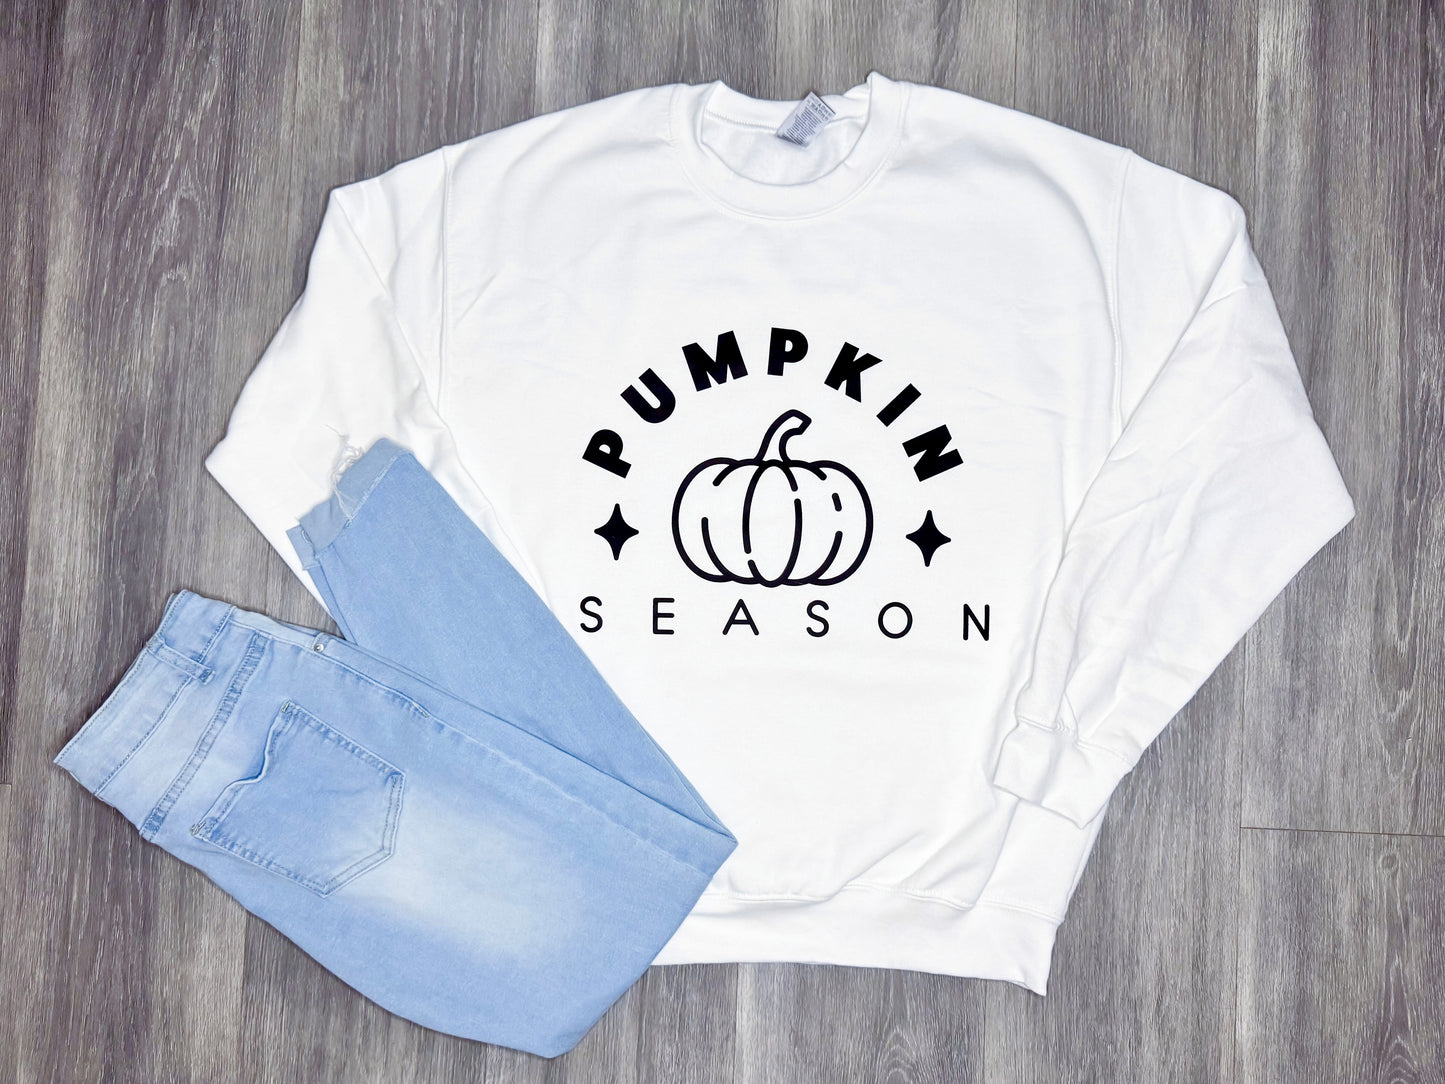 Pumpkin Season Crewneck Sweatshirt